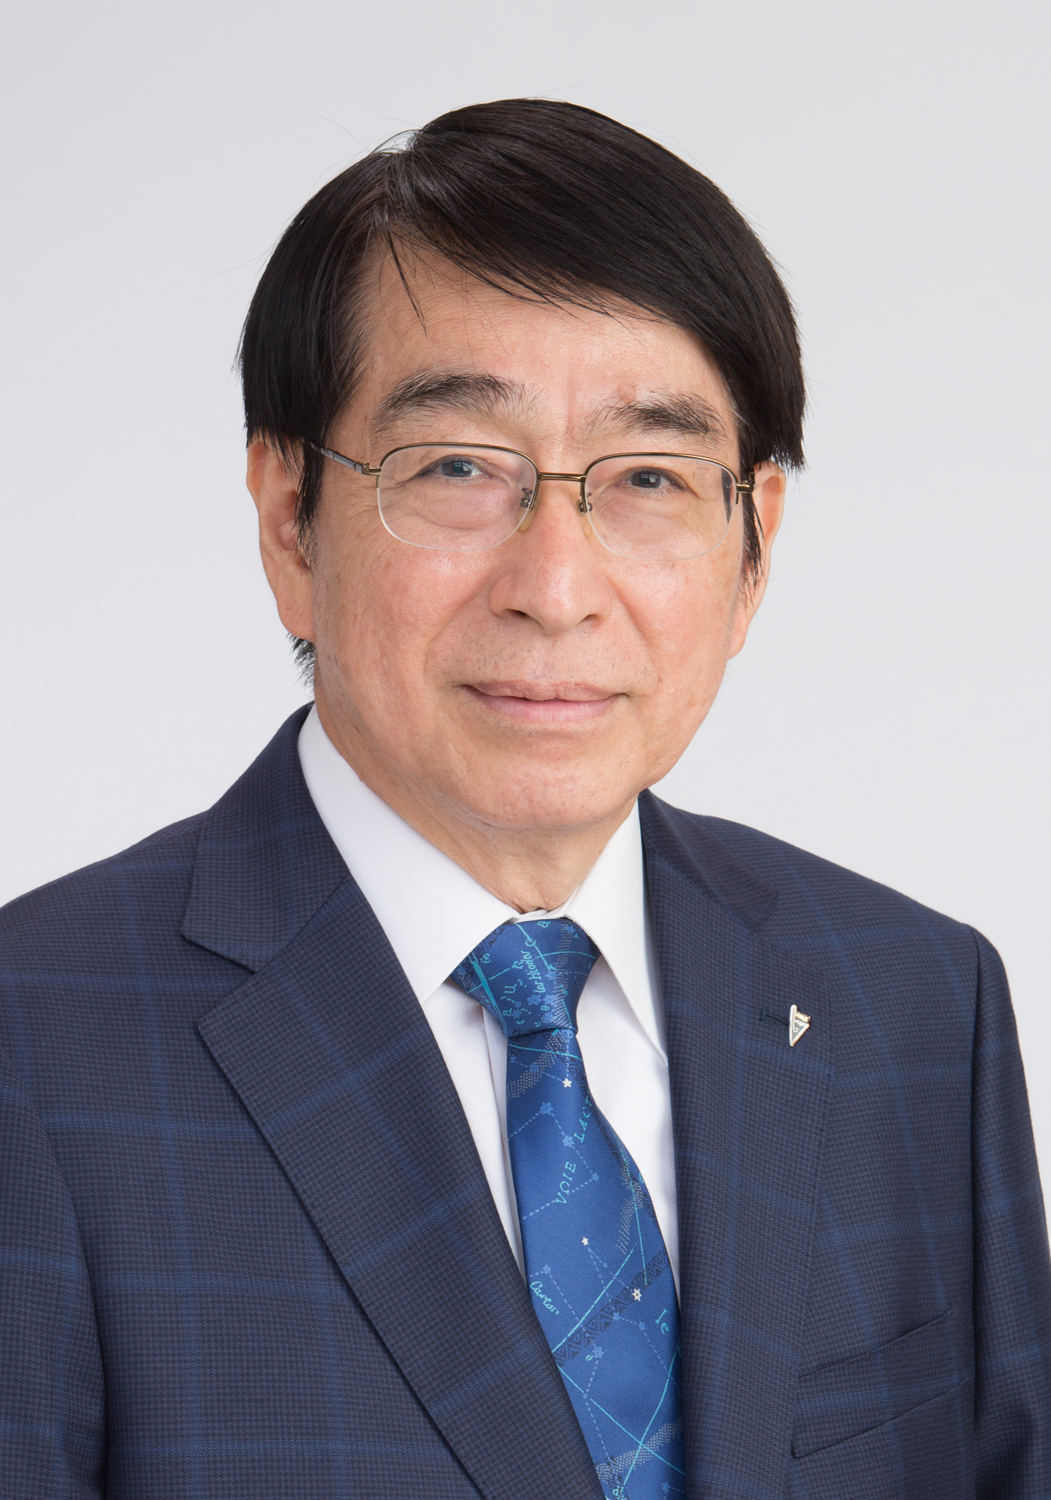 Dr Shunichi Kaseda